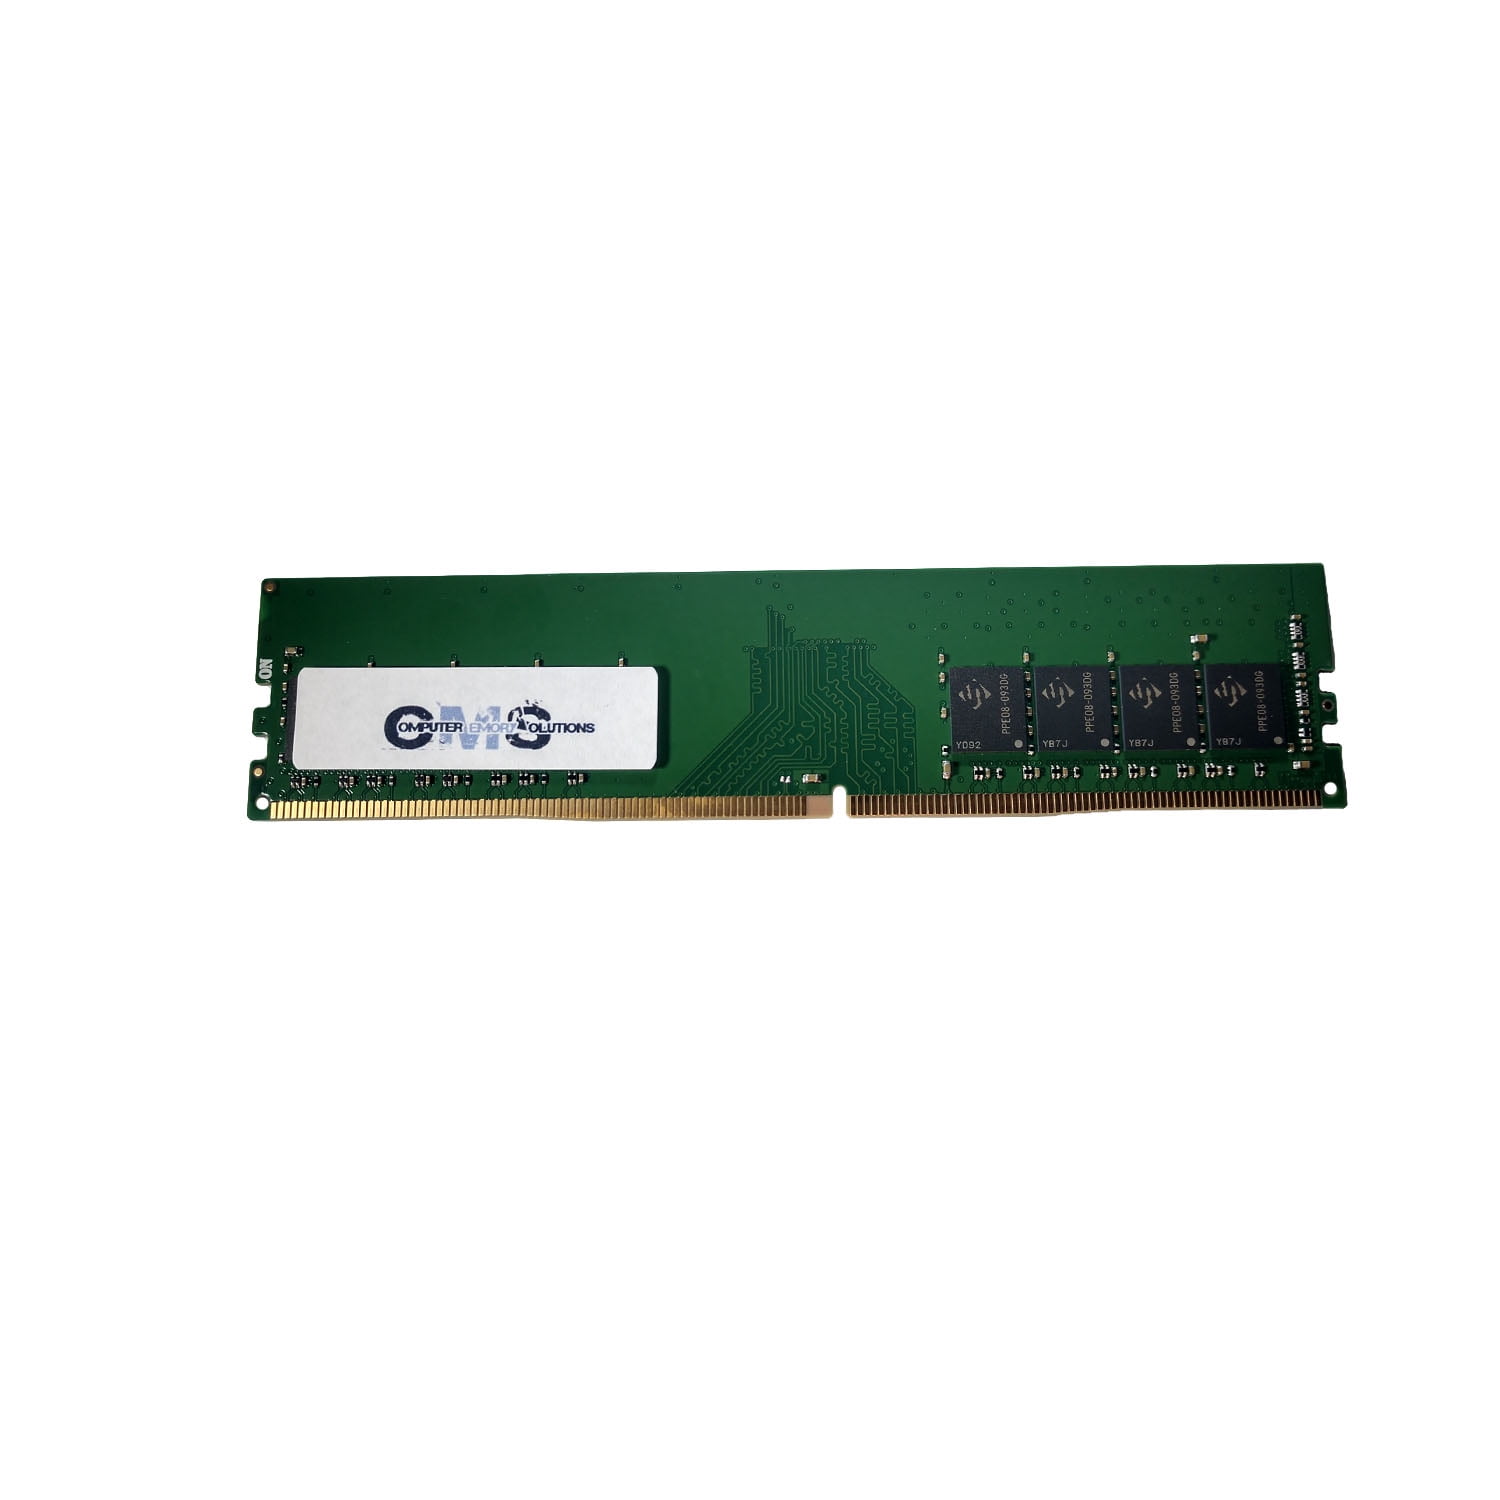 CMS 4GB (1X4GB) DDR4 19200 NON ECC DIMM Ram Upgrade Compatible with Gigabyte® B450 AORUS Elite, B450 AORUS M, B450 AORUS PRO, B450 AORUS WiFi, B450M DS3H -